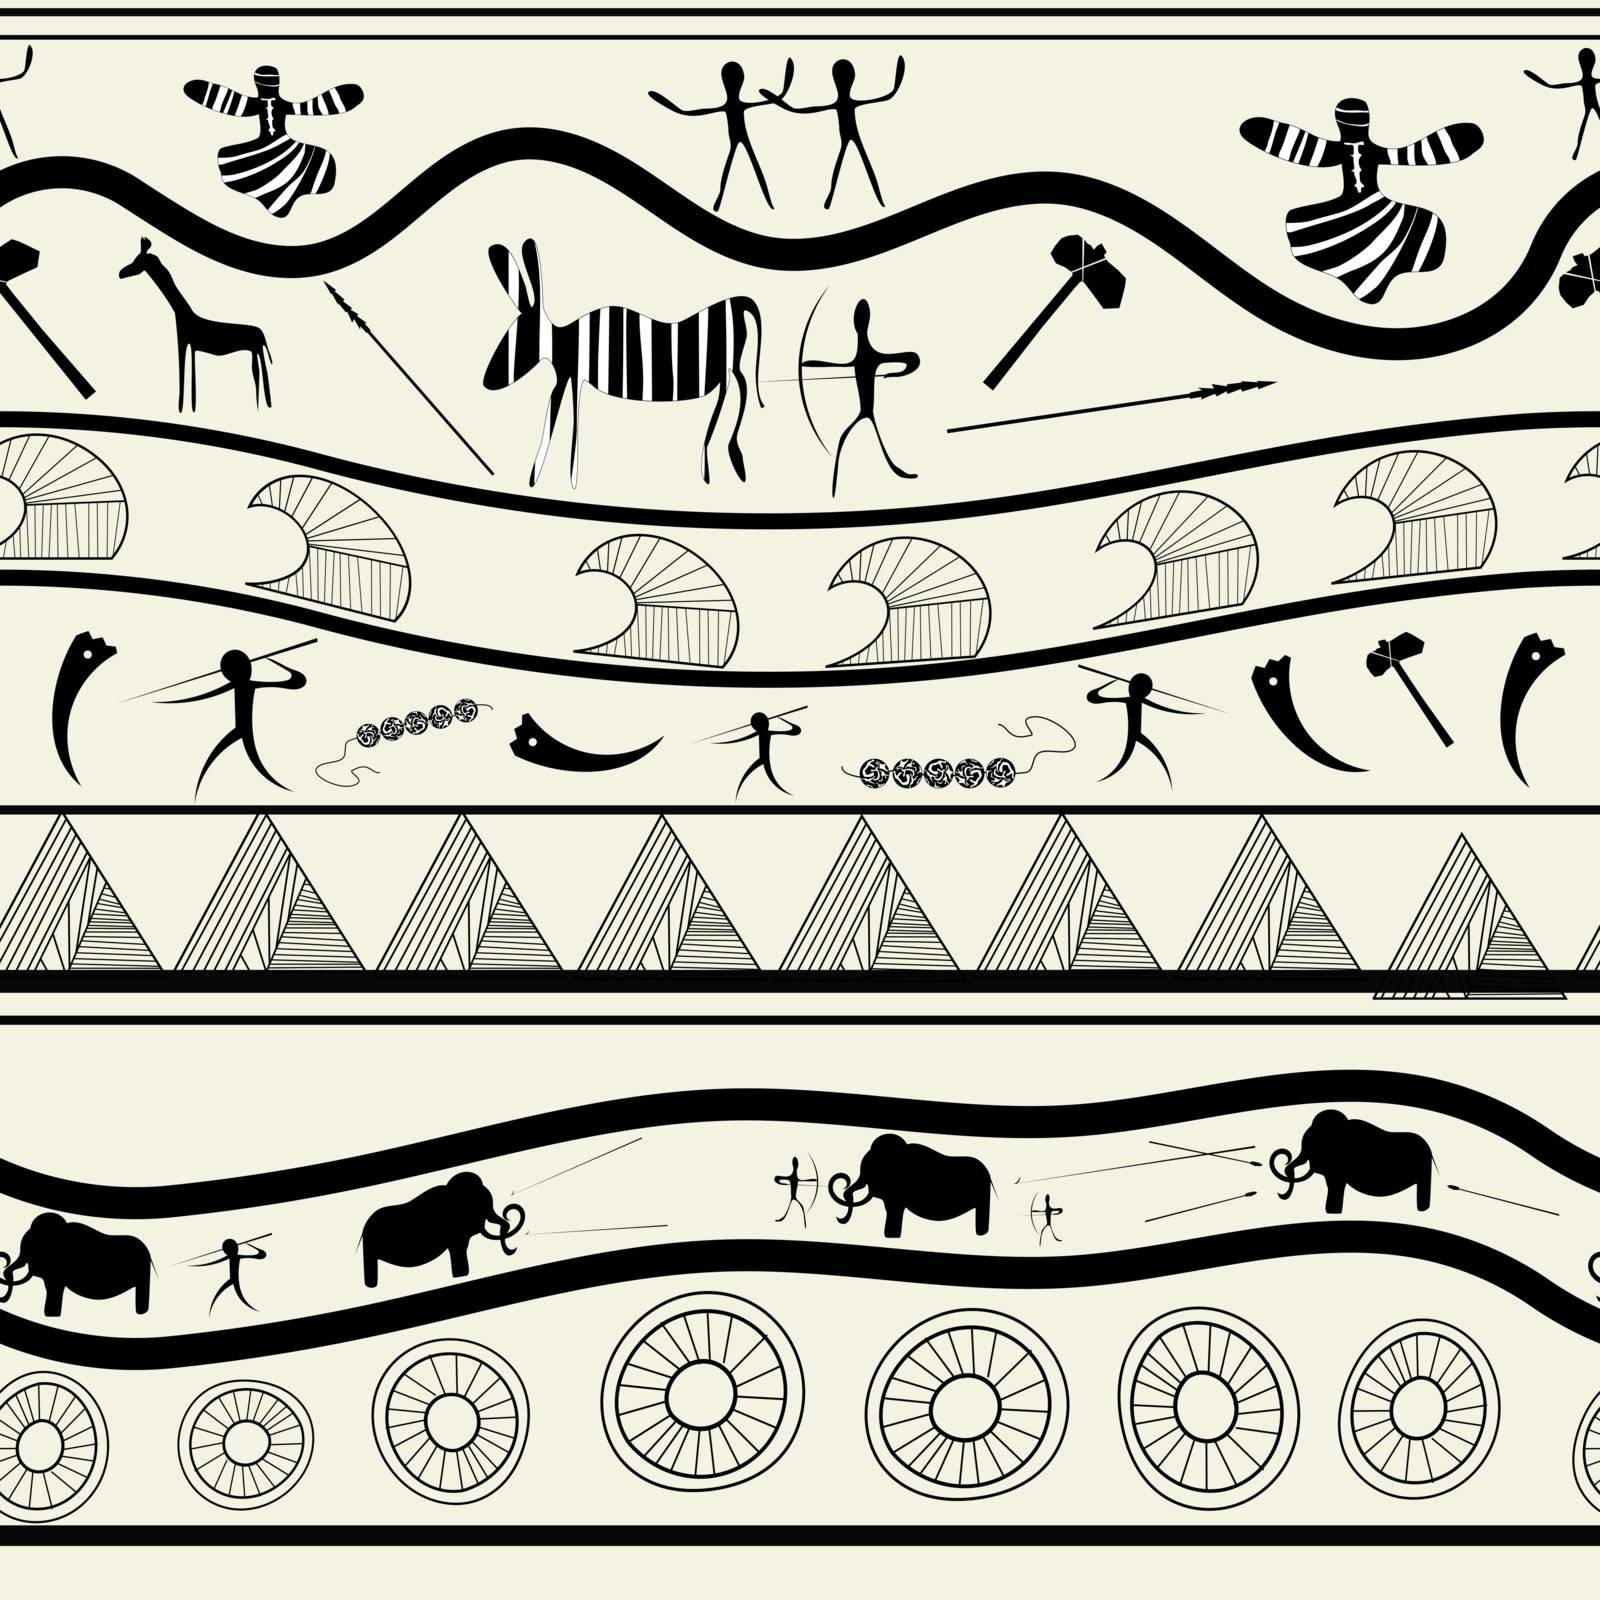 Seamless tribal pattern by Larser